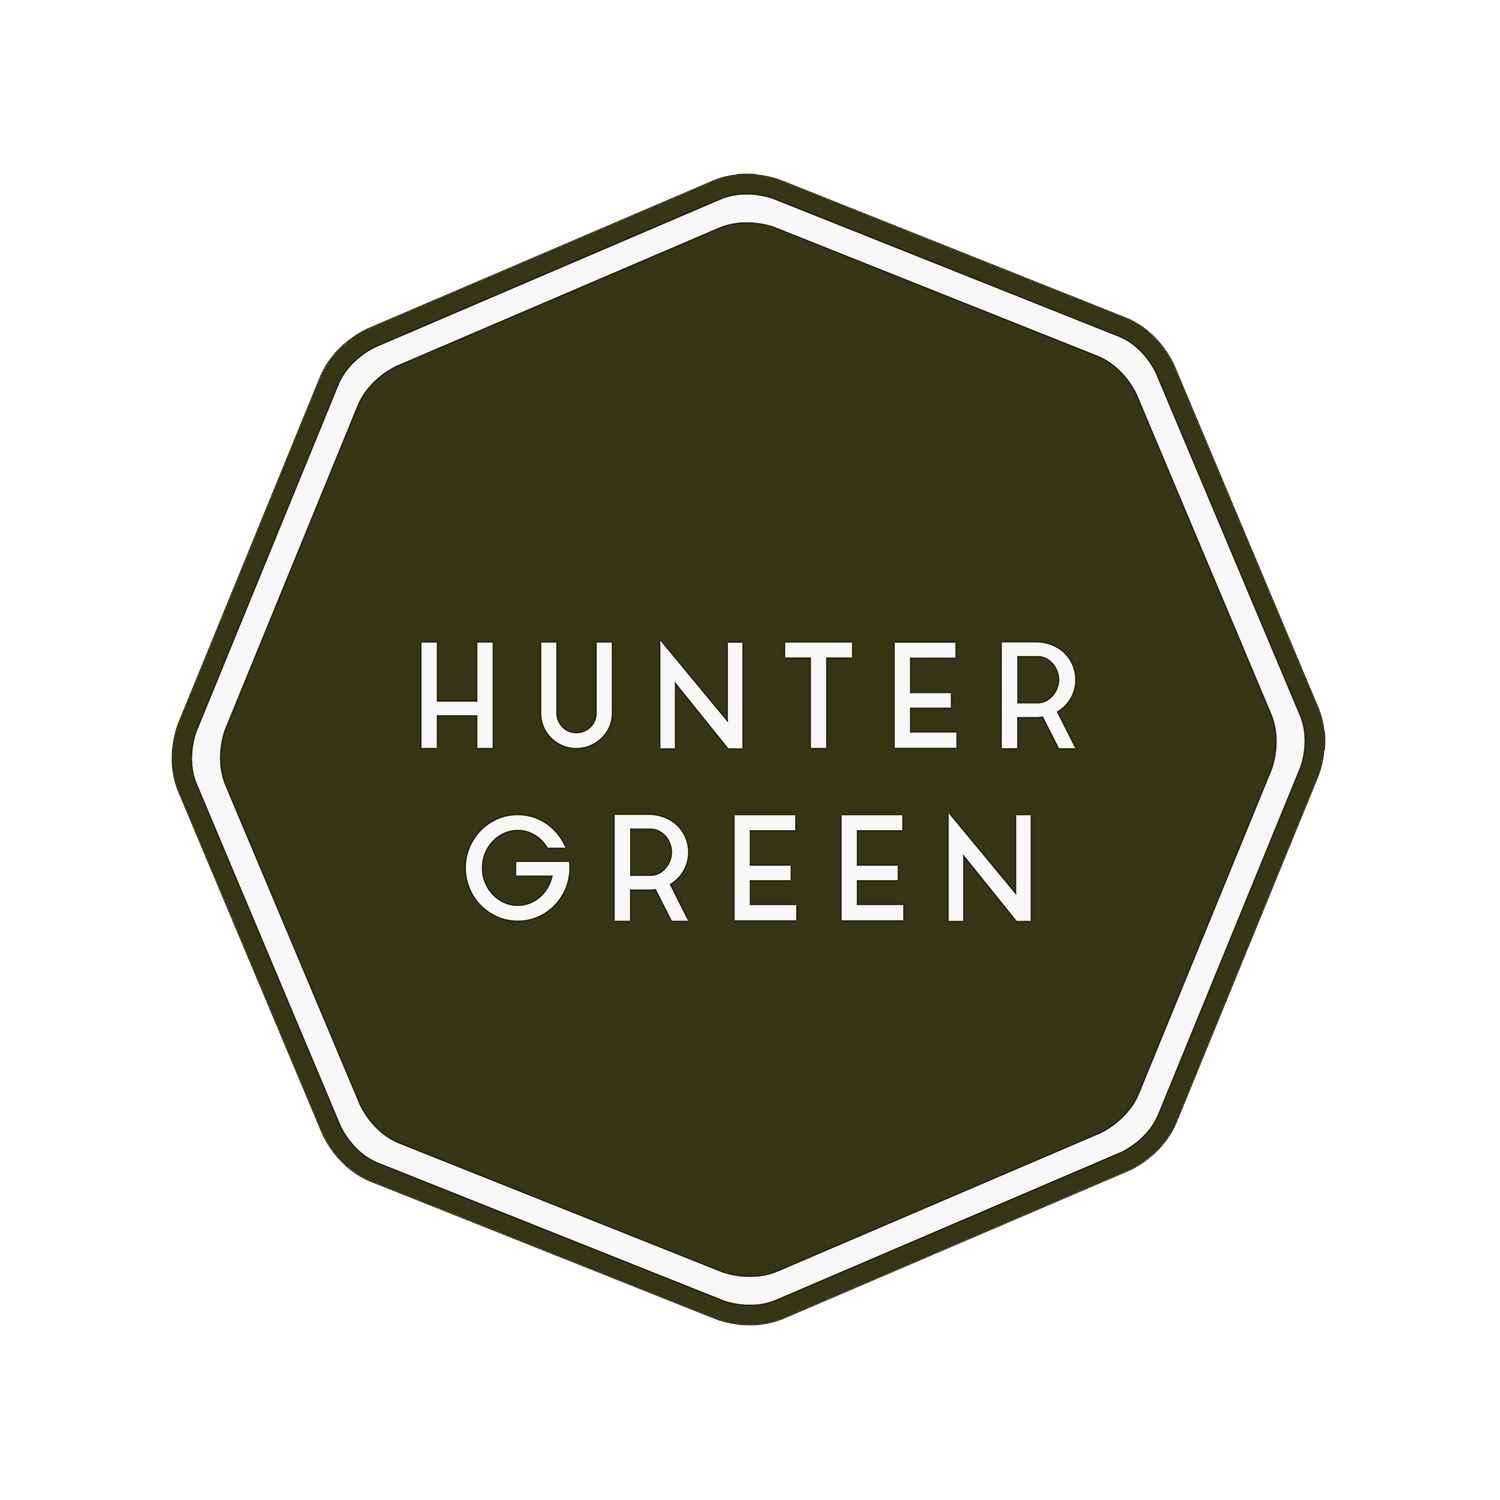 Huntergreen